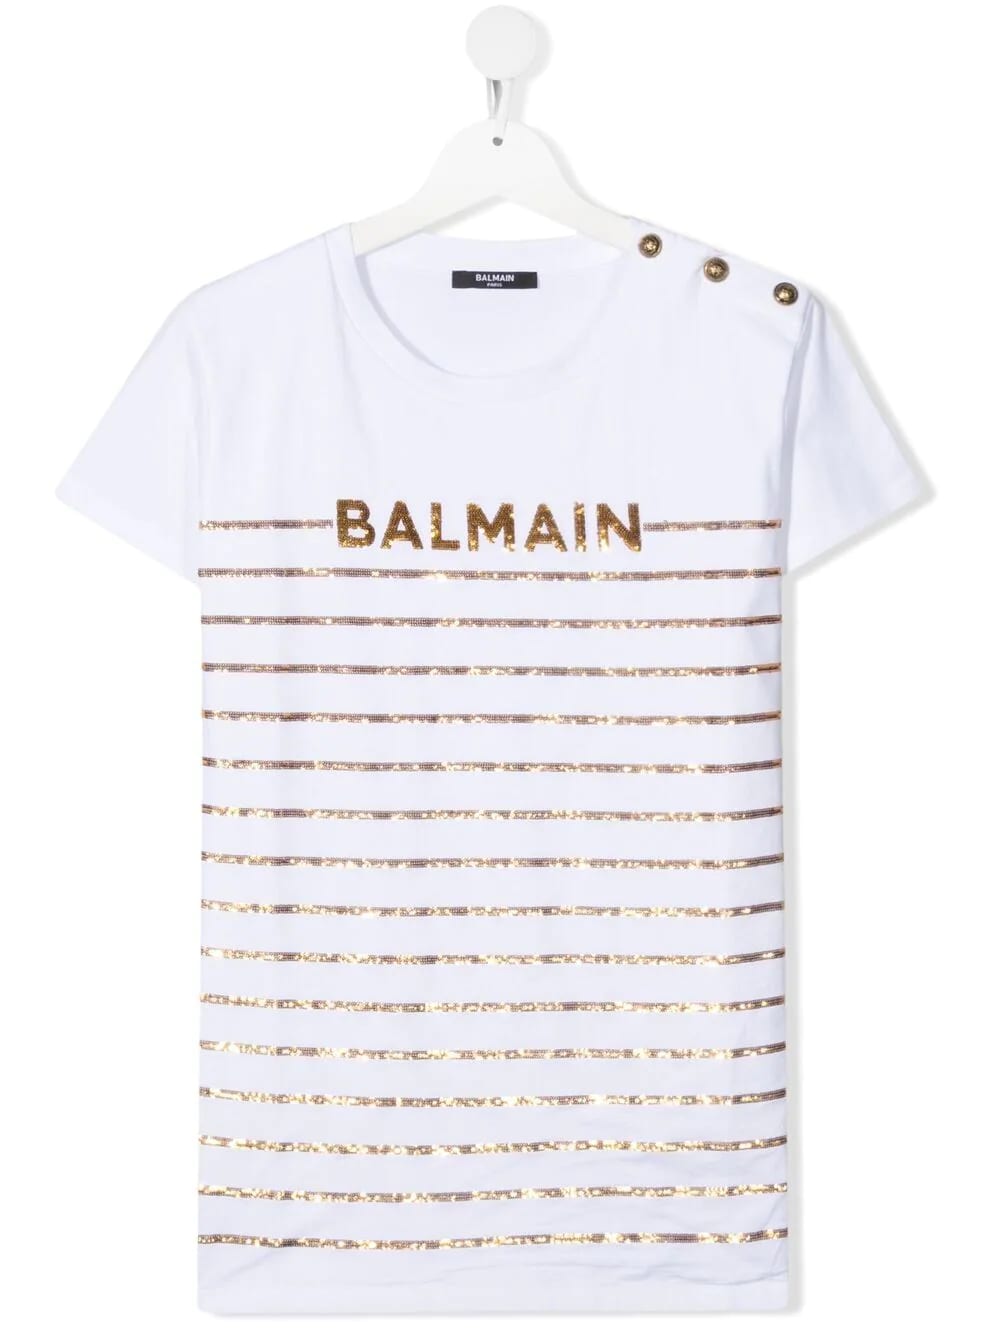 BALMAIN KID BALMAIN WHITE AND GOLD STRIPED T-SHIRT,6O8061-OB690 100